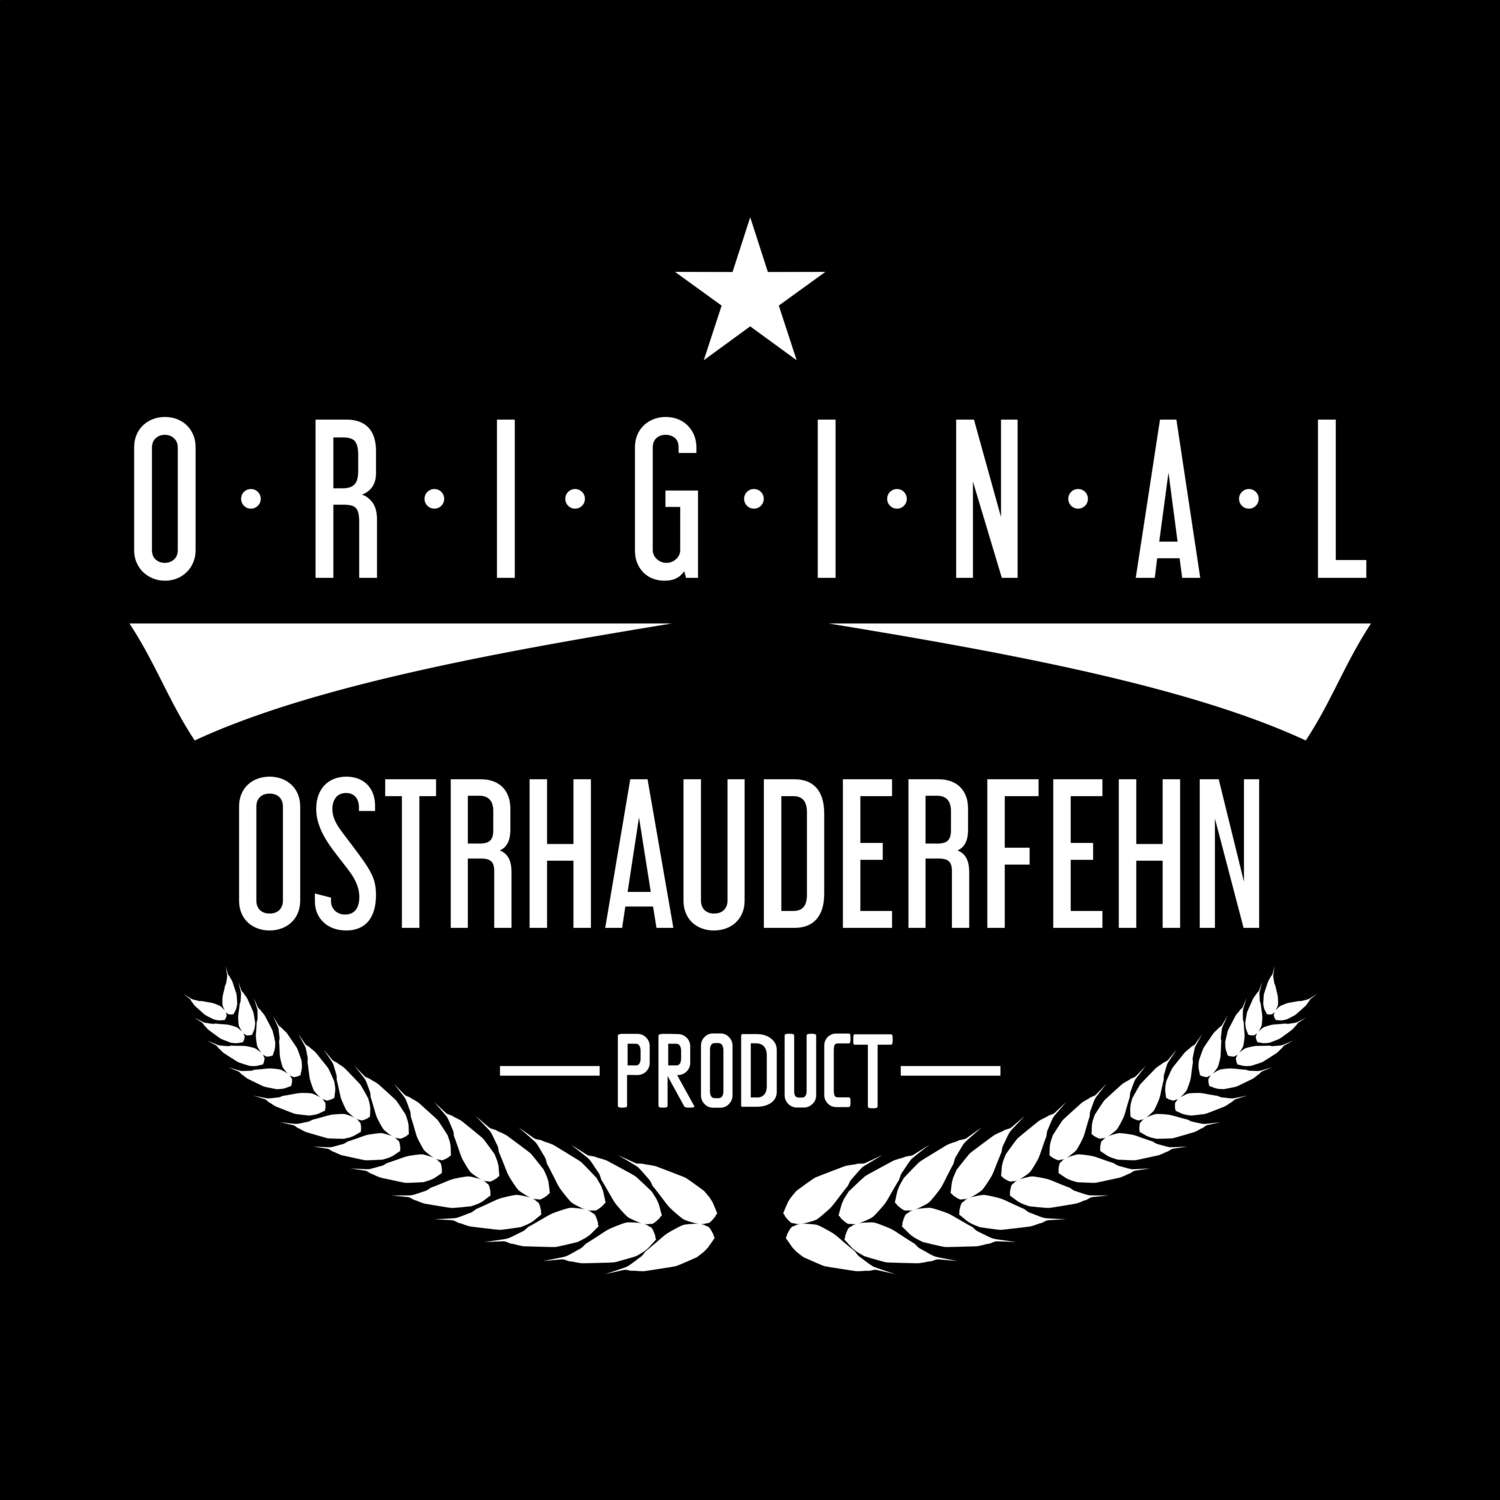 Ostrhauderfehn T-Shirt »Original Product«